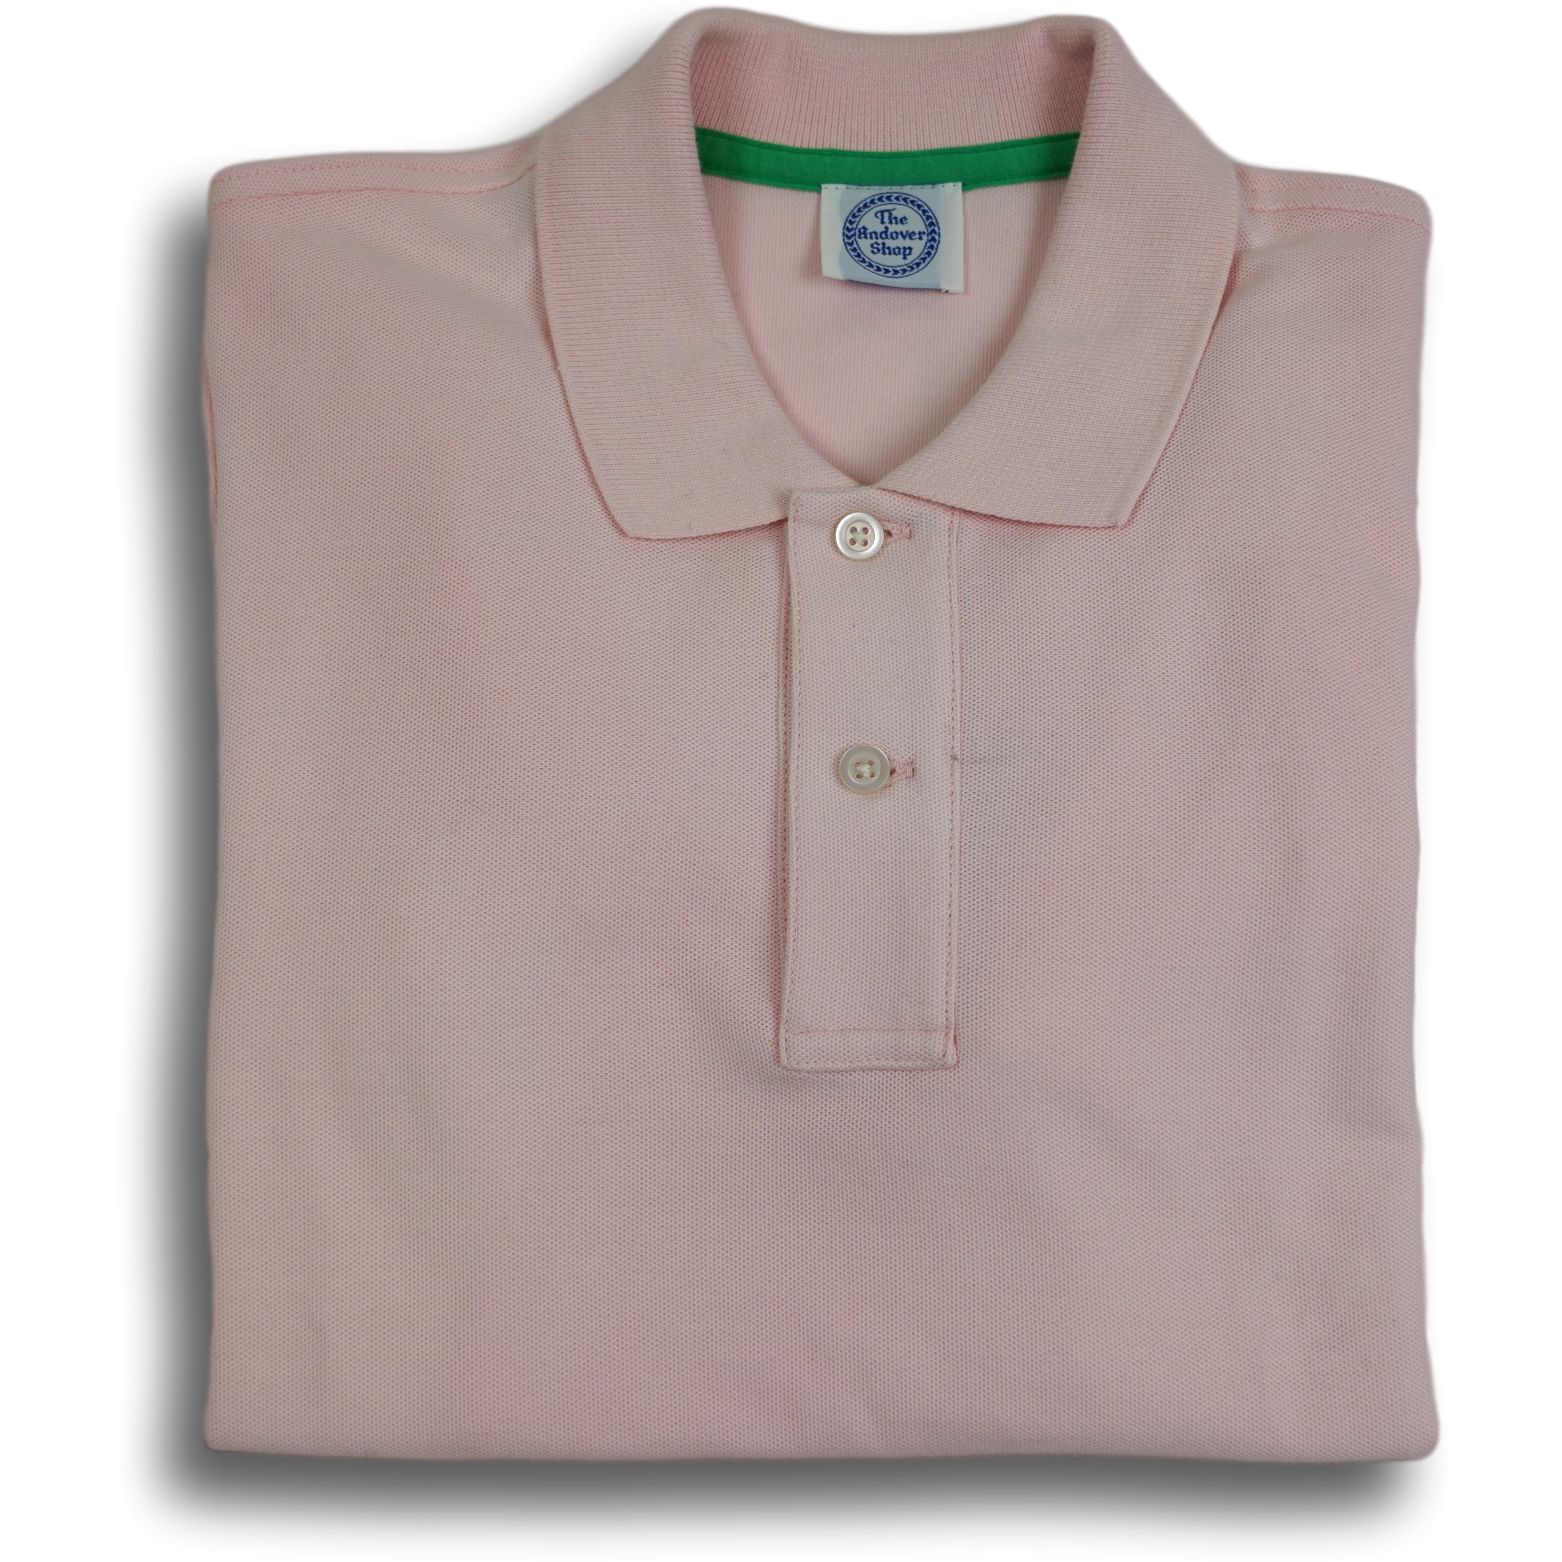 New Lifeline Women's Poloshirt (Baby Pink) For Sale - Lifeline Shirts